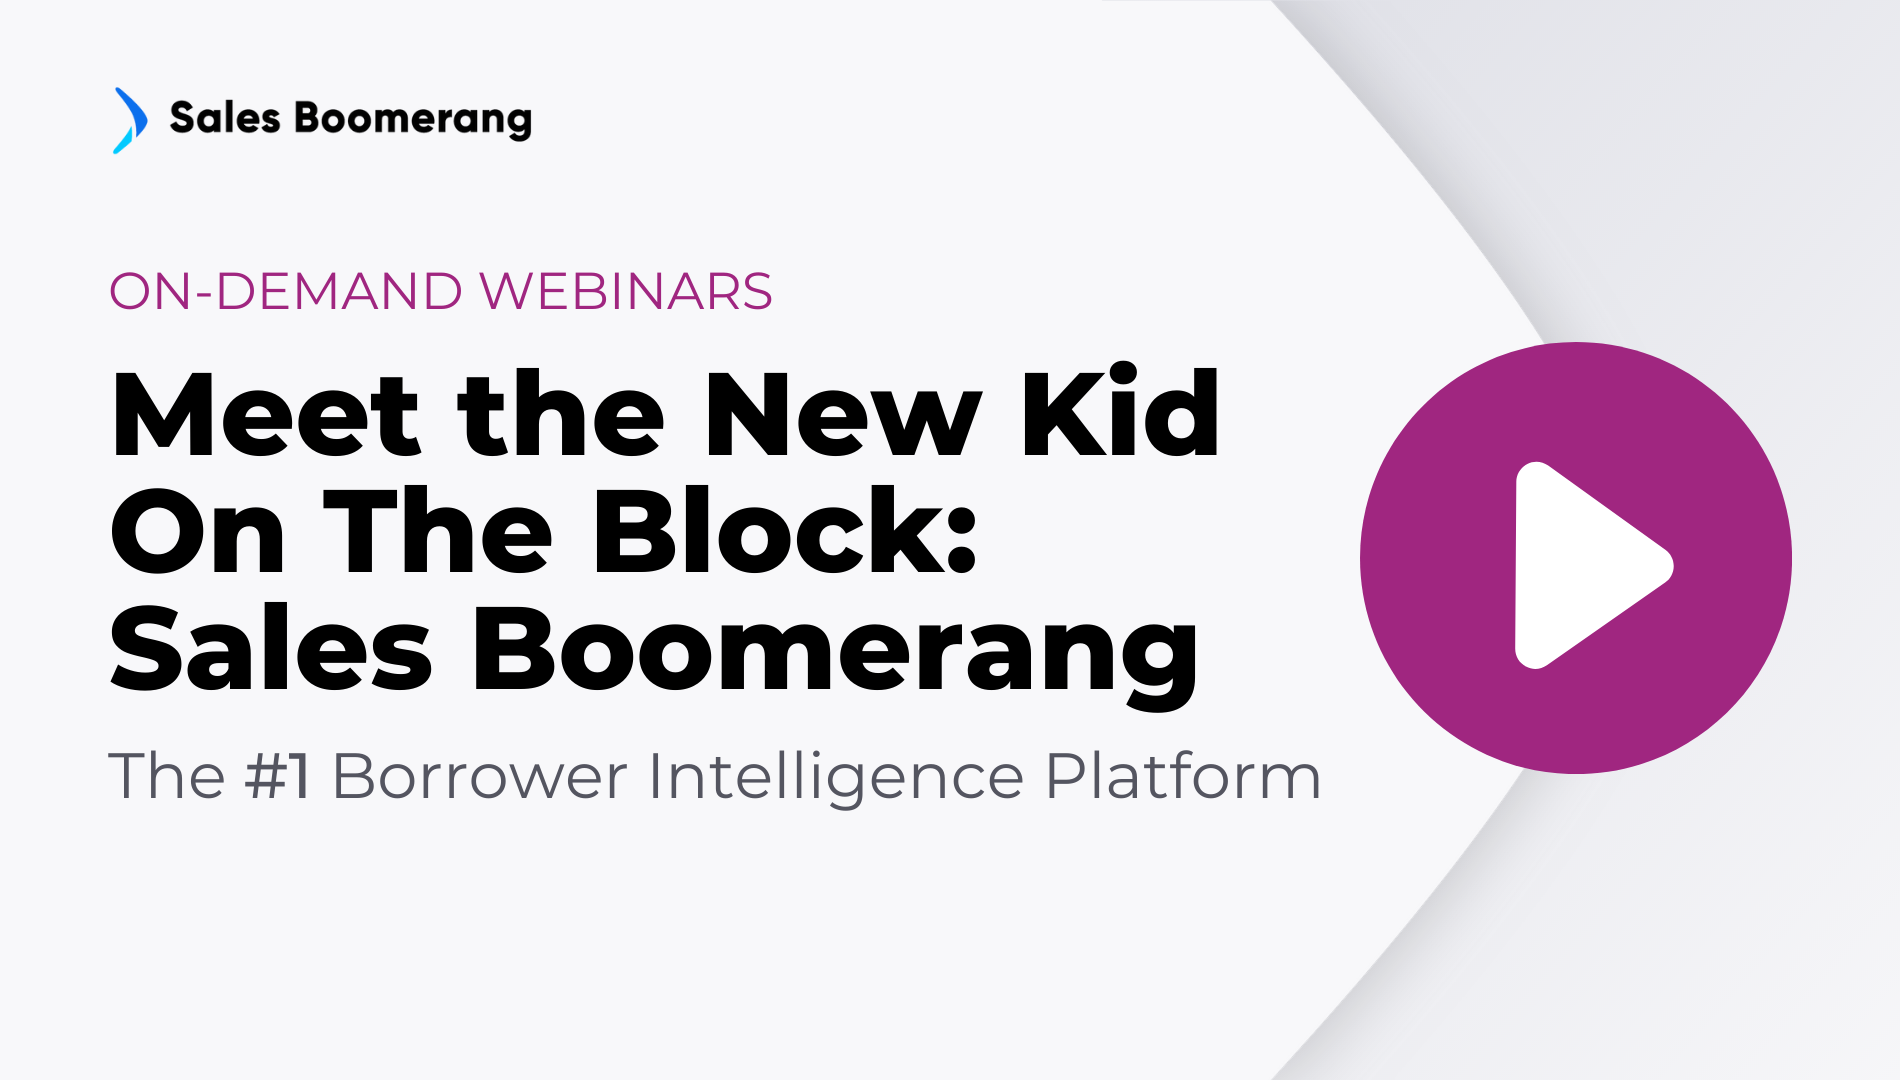 Meet the New Kid On The Block: Sales Boomerang, the #1 Borrower Intelligence Platform